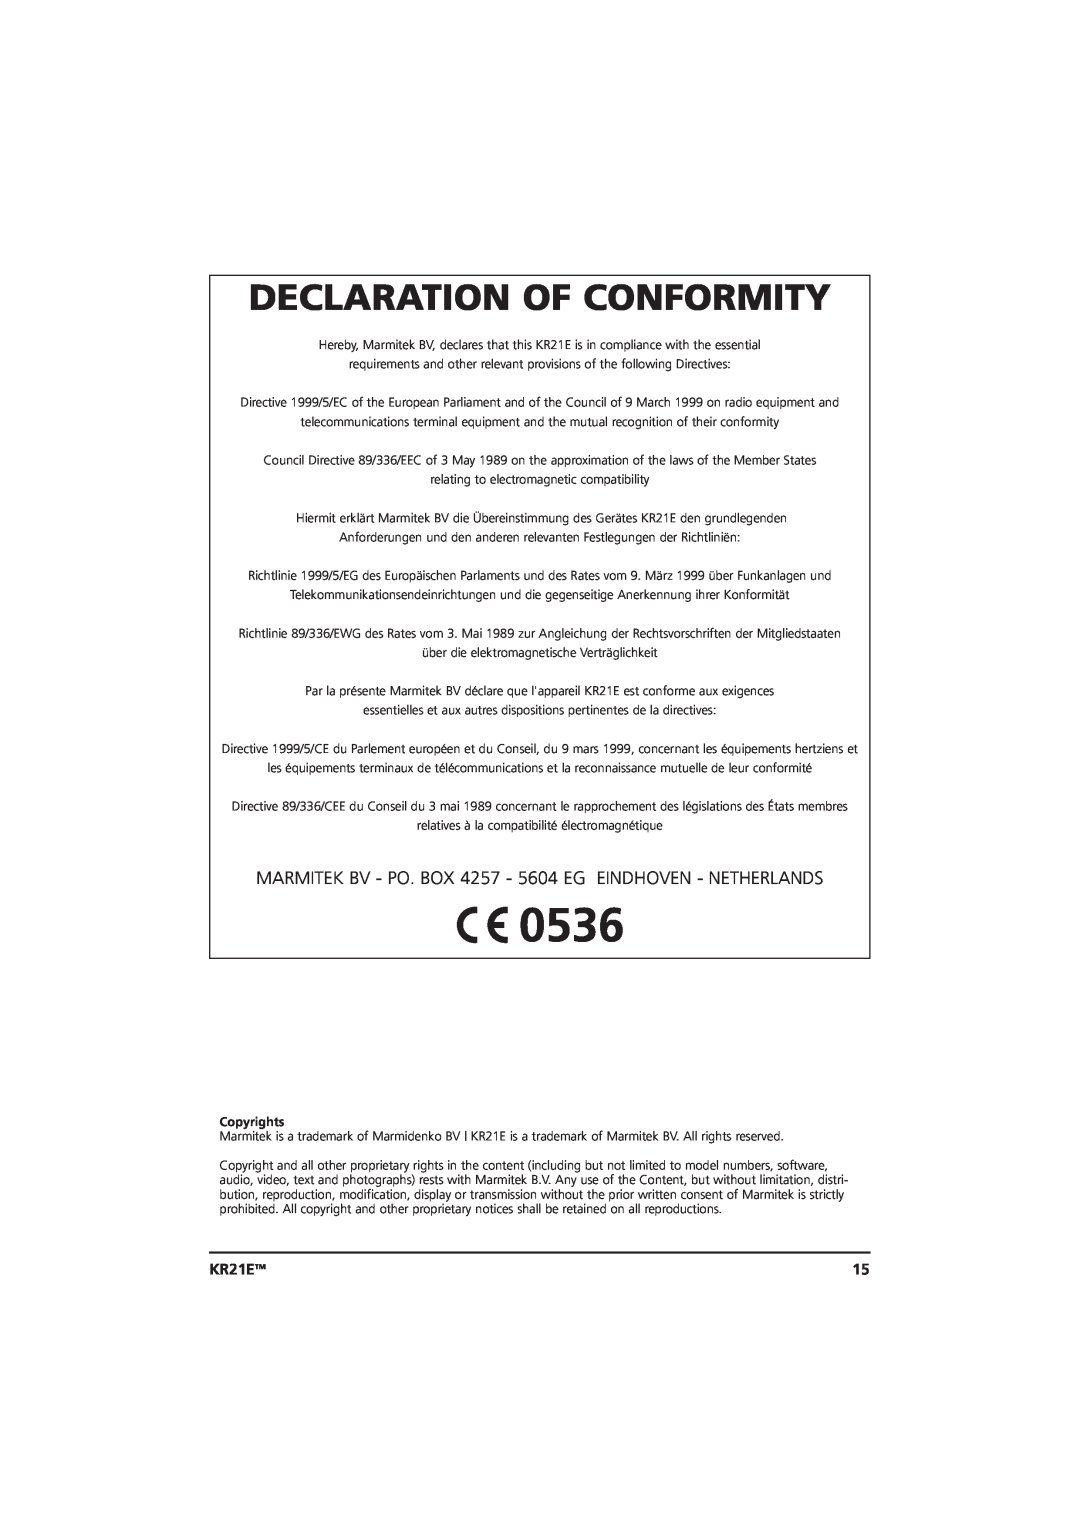 Marmitek 20075/20070403 user manual Declaration Of Conformity, KR21ETM, Copyrights 